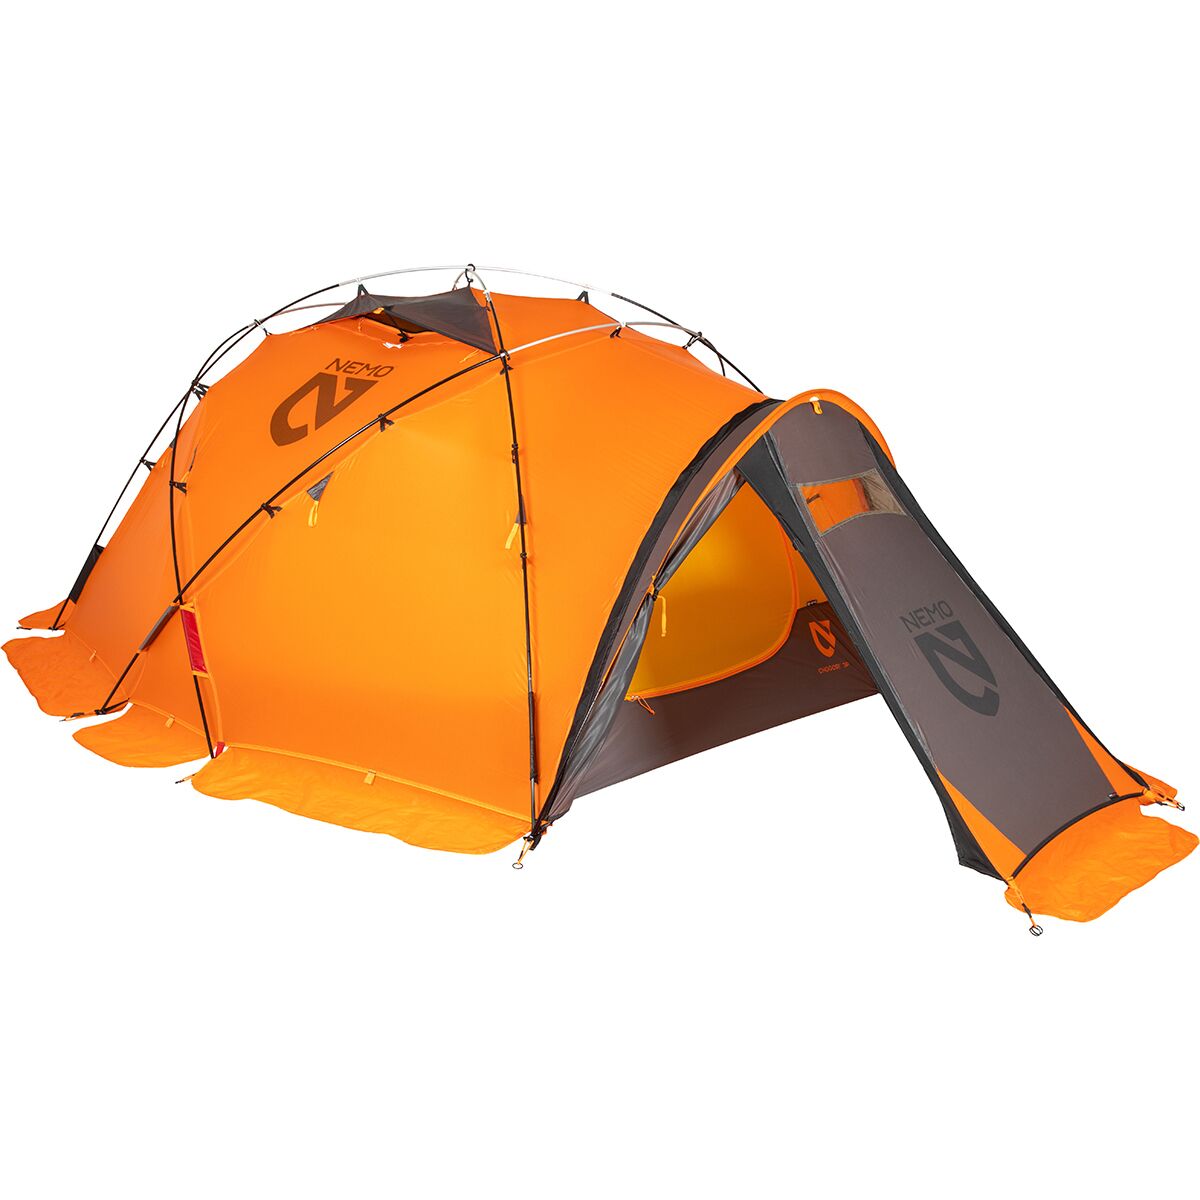 NEMO Equipment Inc. Chogori Mountaineering Tent: 3-Person 4-Season